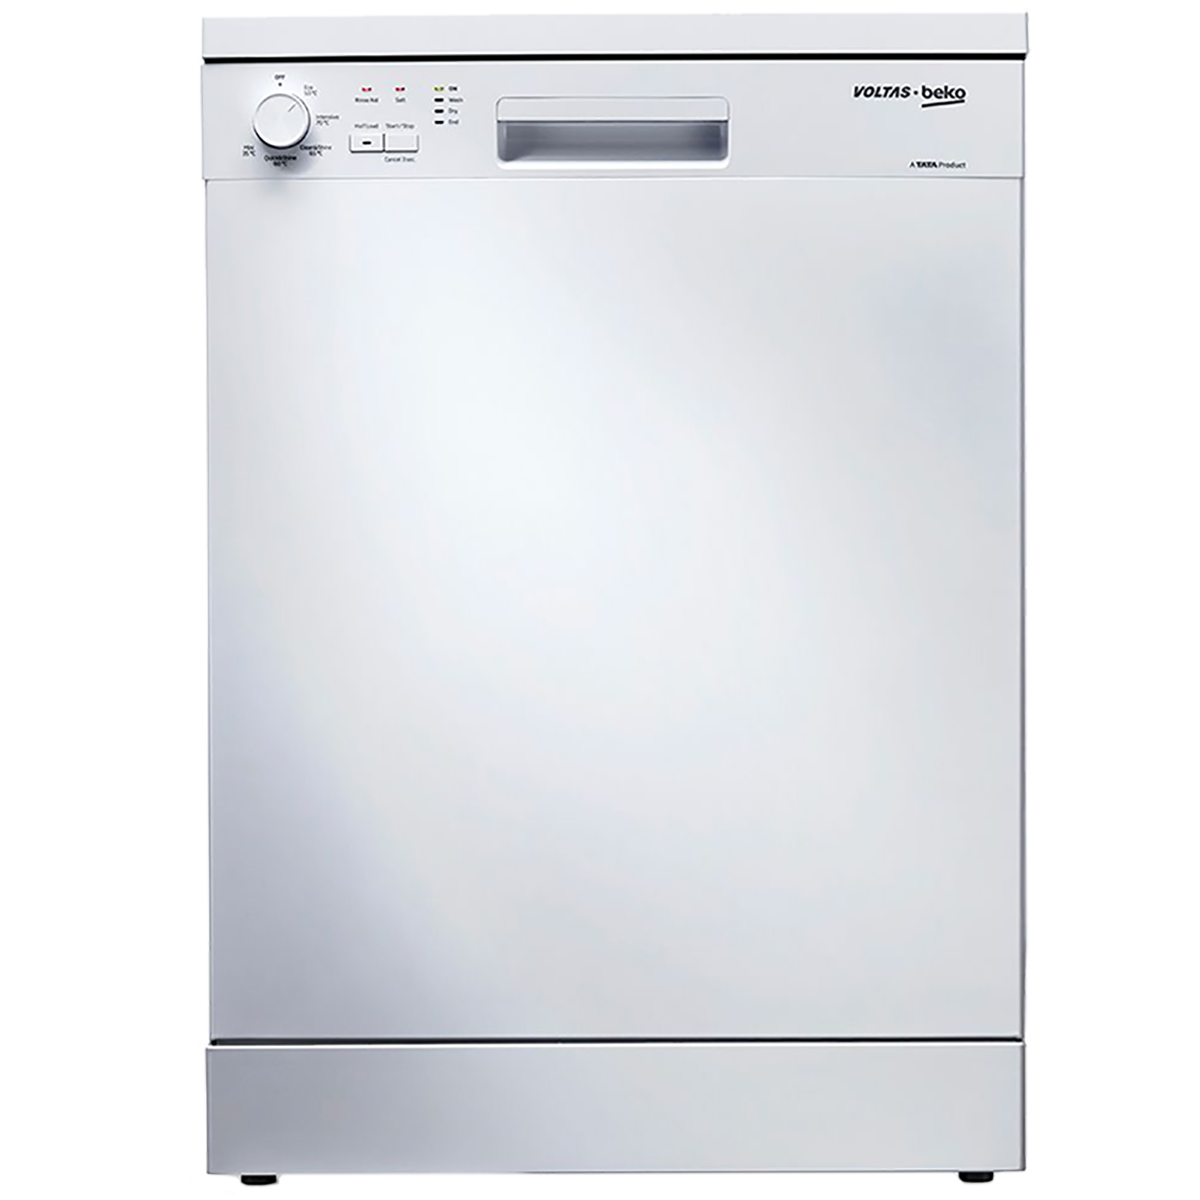 Voltas Beko 14 Place Setting Freestanding Dishwasher (Water Softening System, DF14W, White)_1